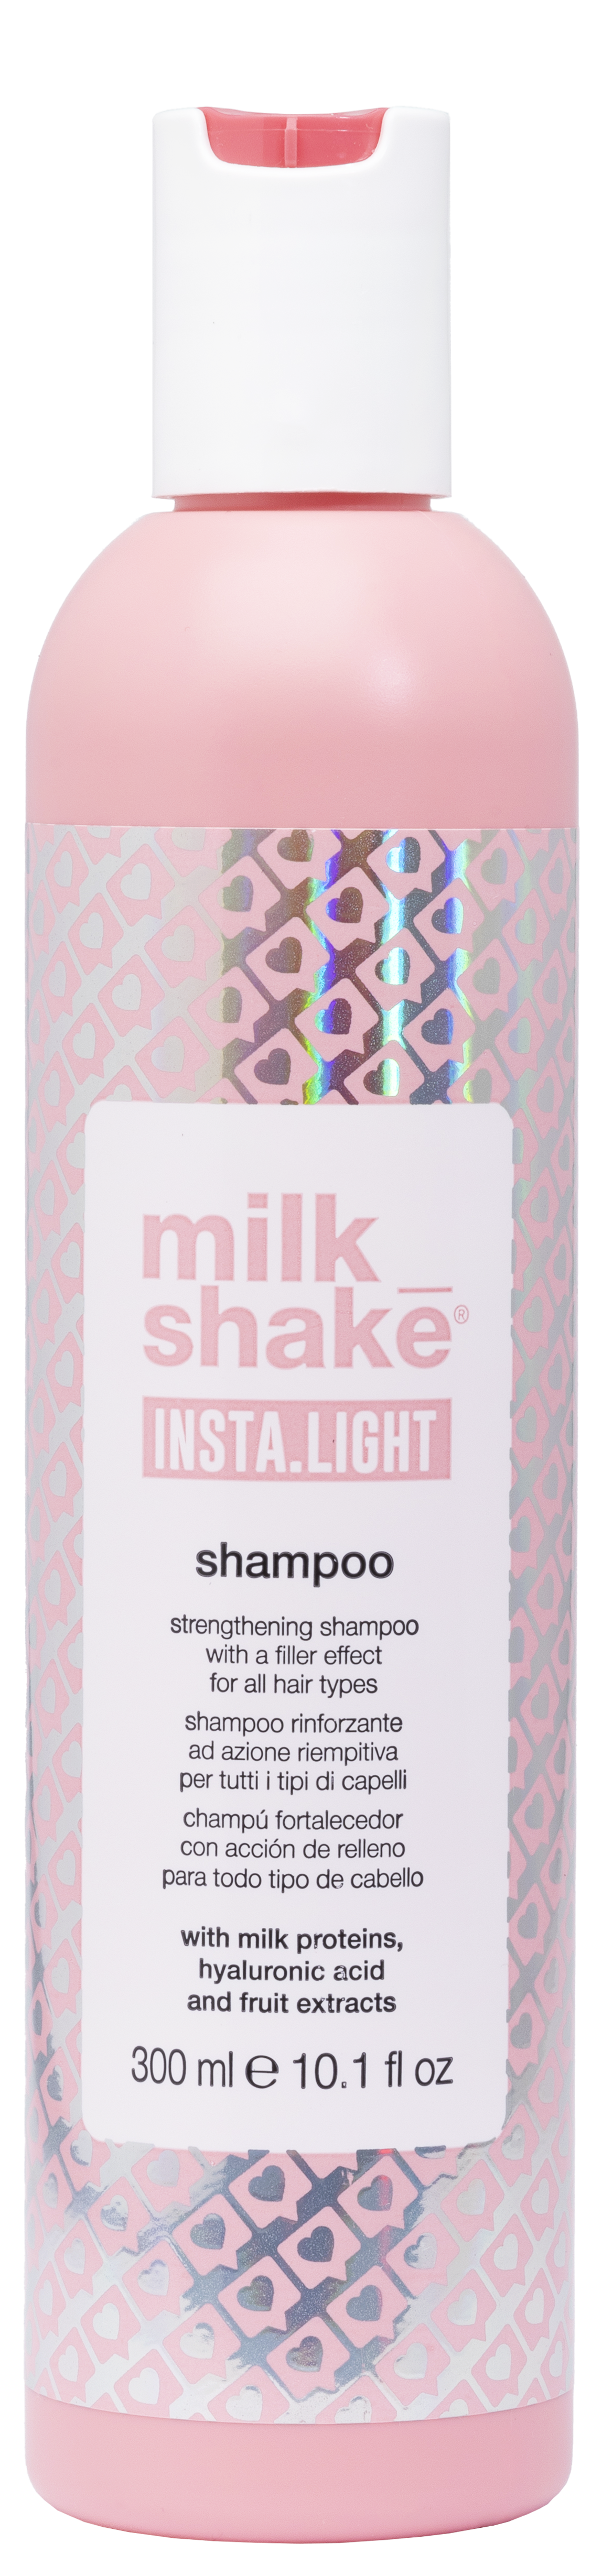 Champú Milk_Shake Insta.Light